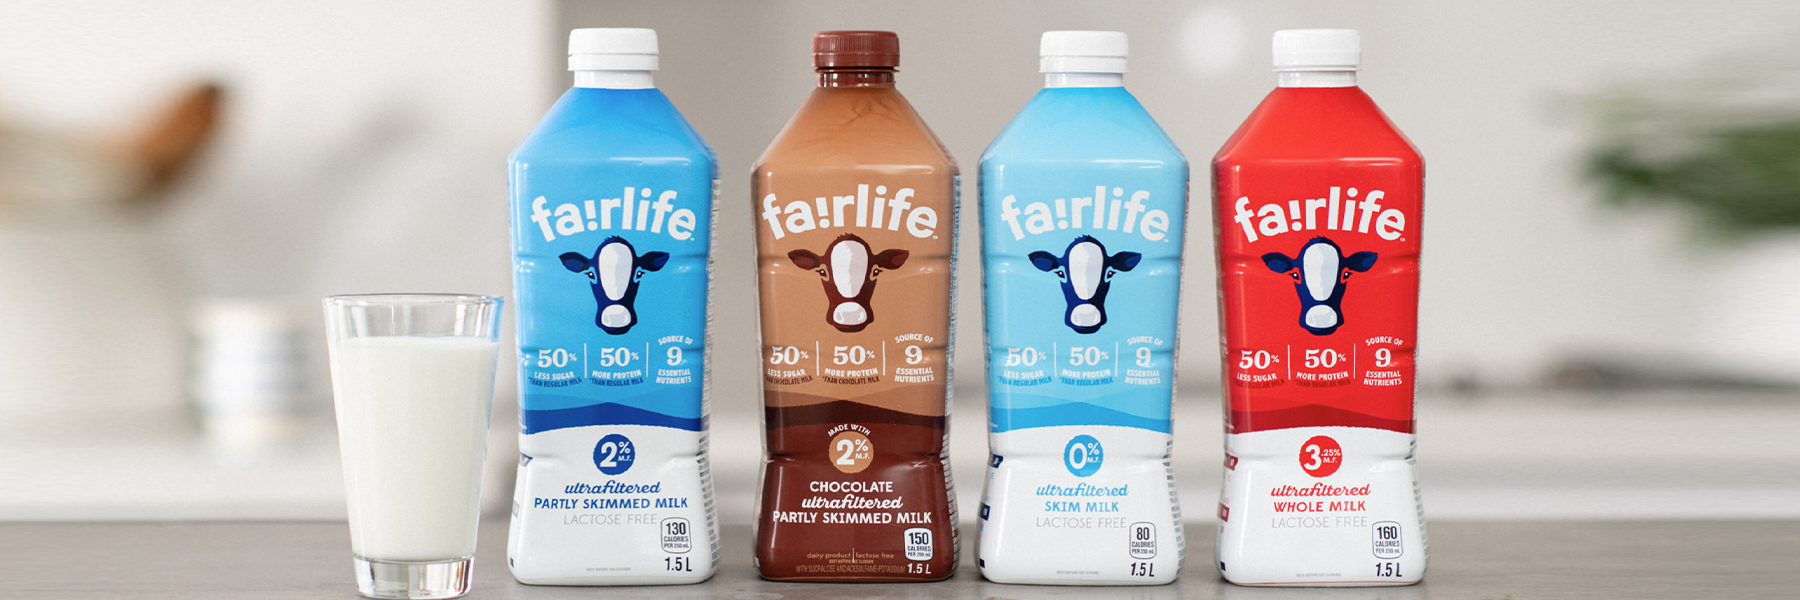 Lineup of fairlife milk varieties in a kitchen